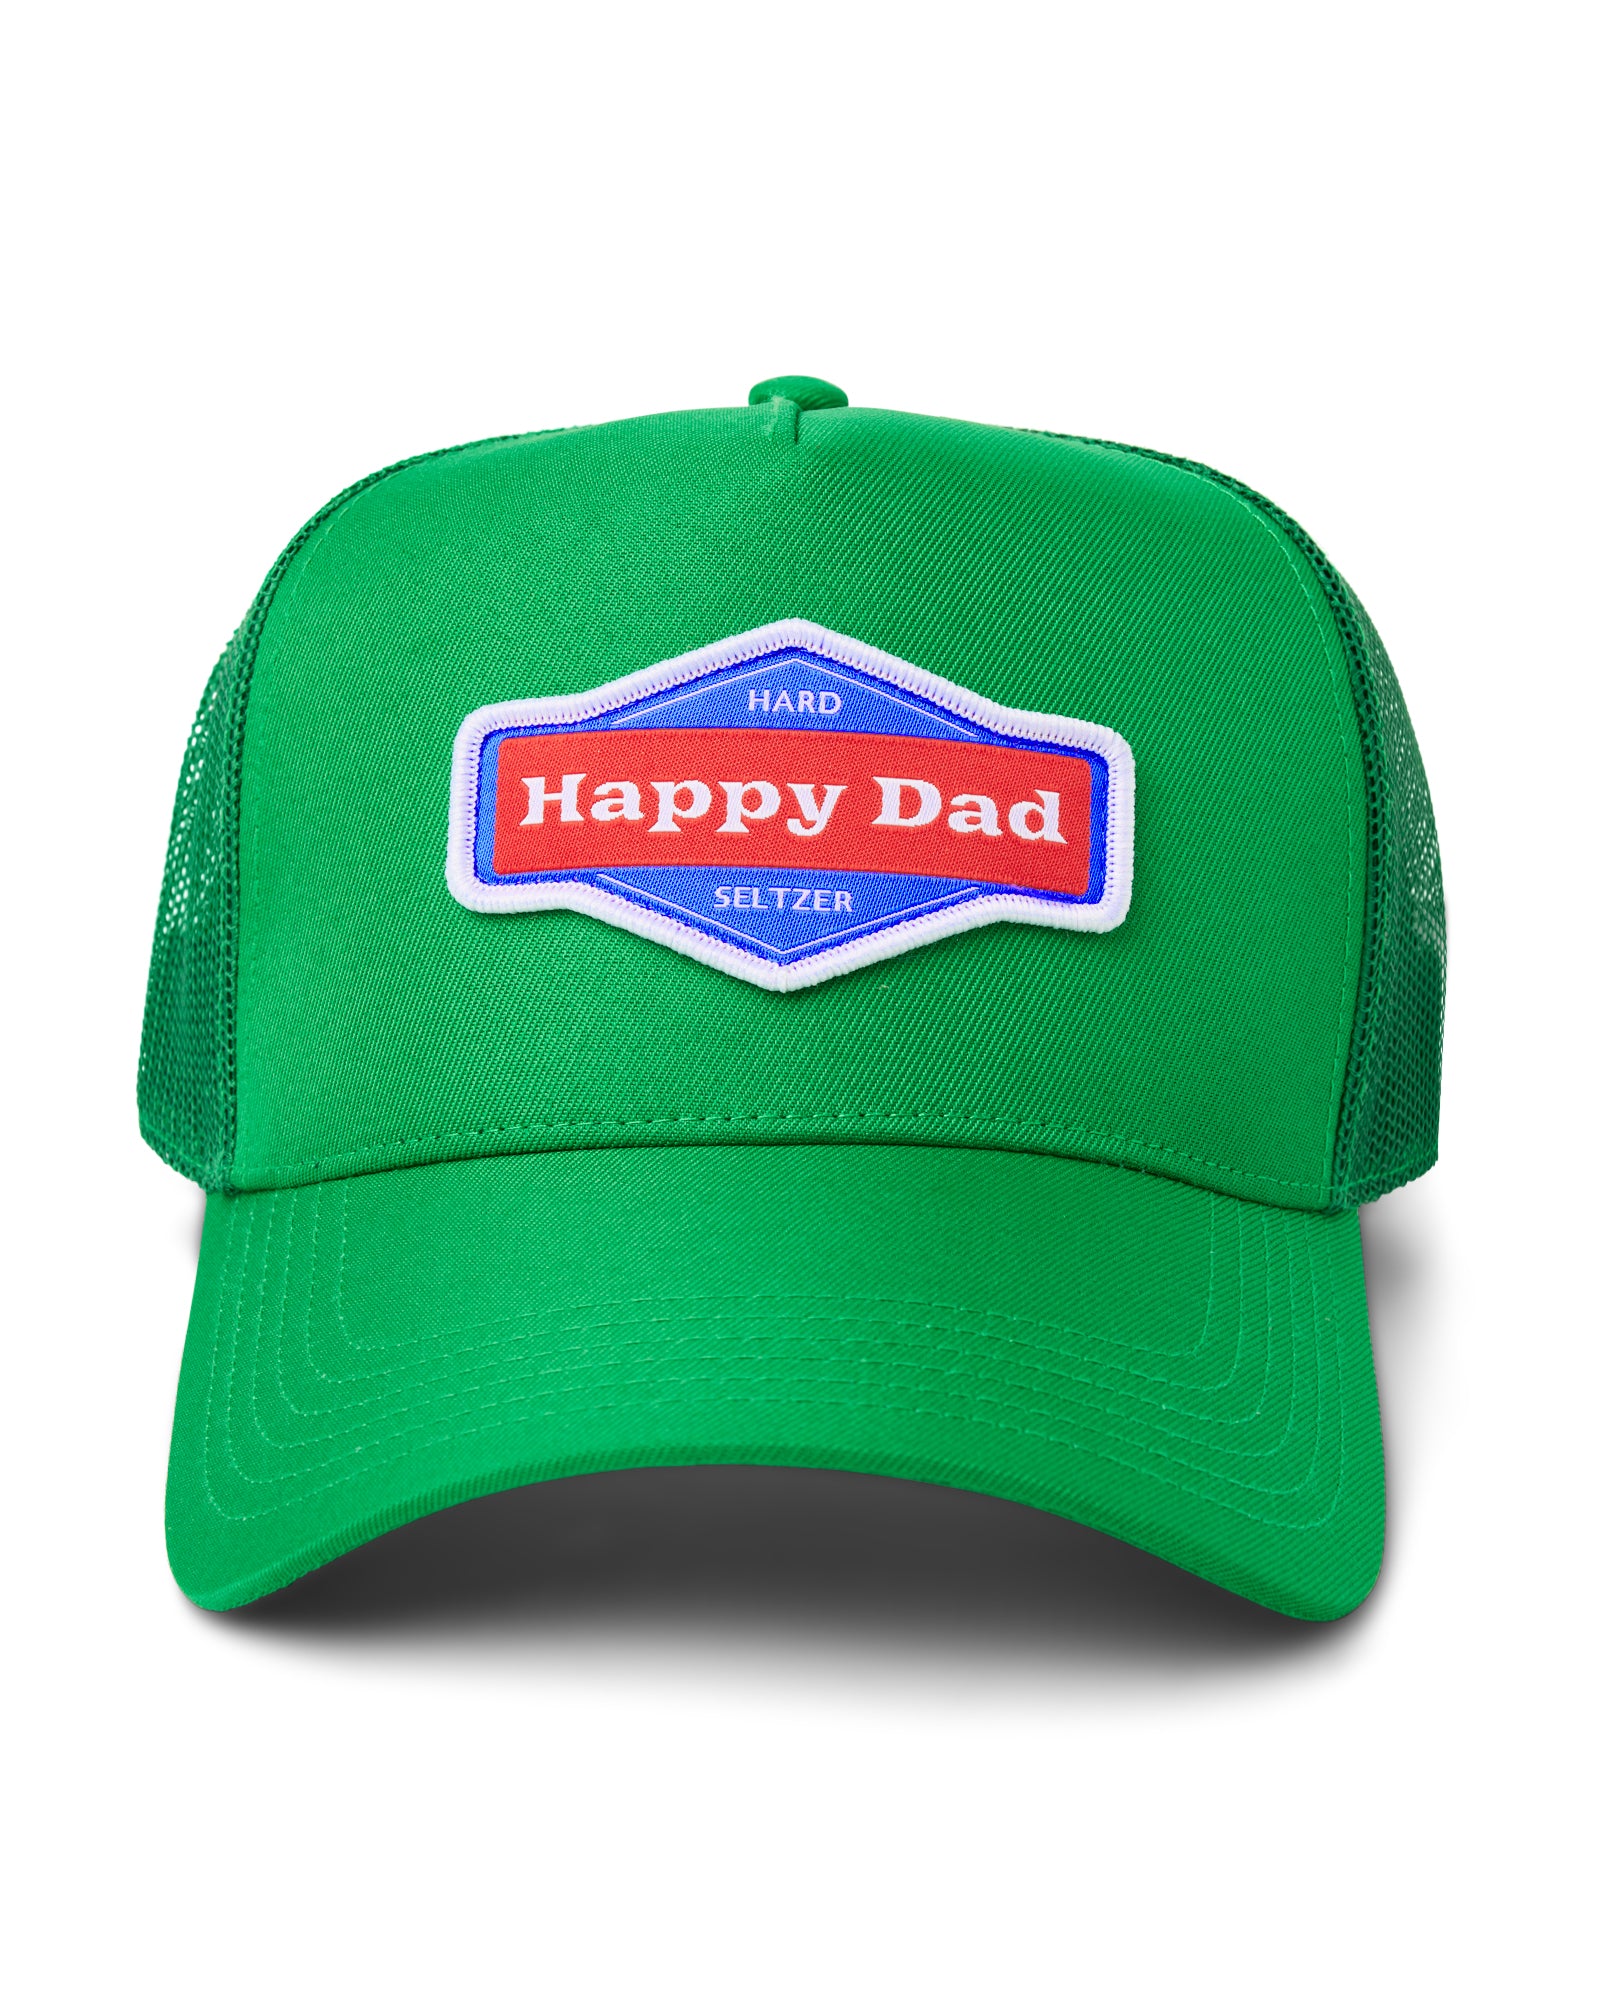 Happy Dad Trucker Hat (Green)